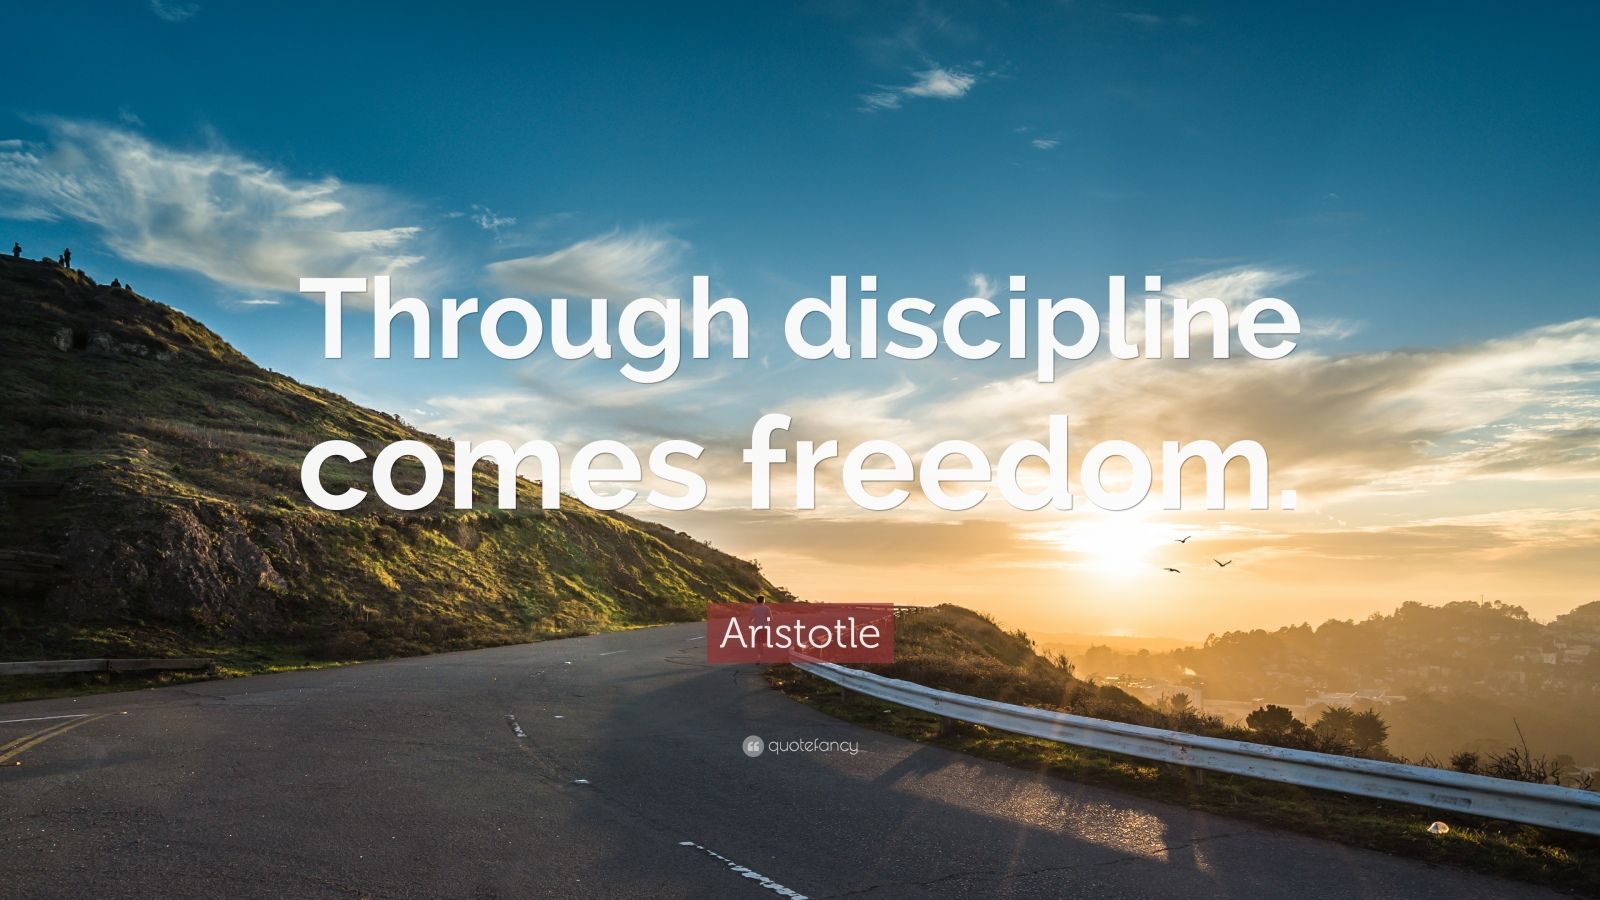 Aristotle Quote: “Through discipline comes freedom.” (33 wallpapers) - Quotefancy1600 x 900